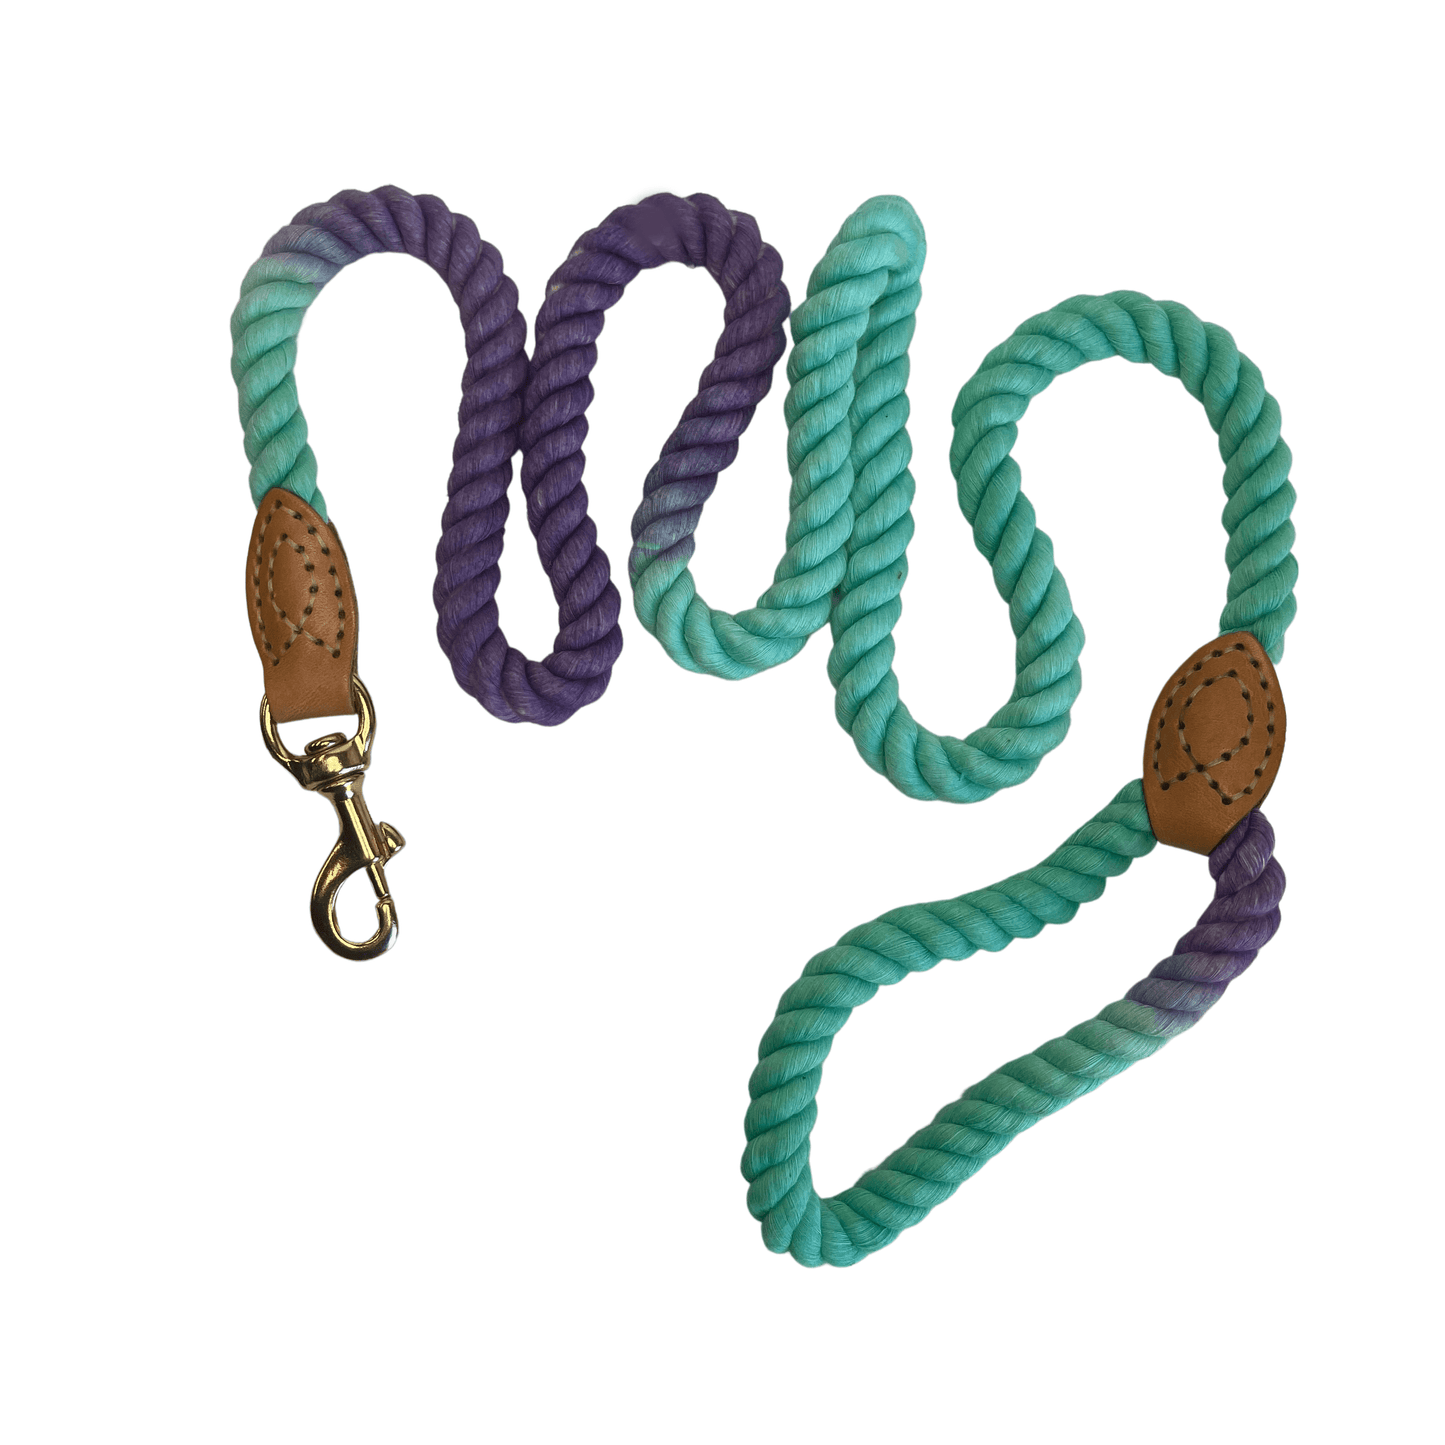 Cotton rope dog leash.